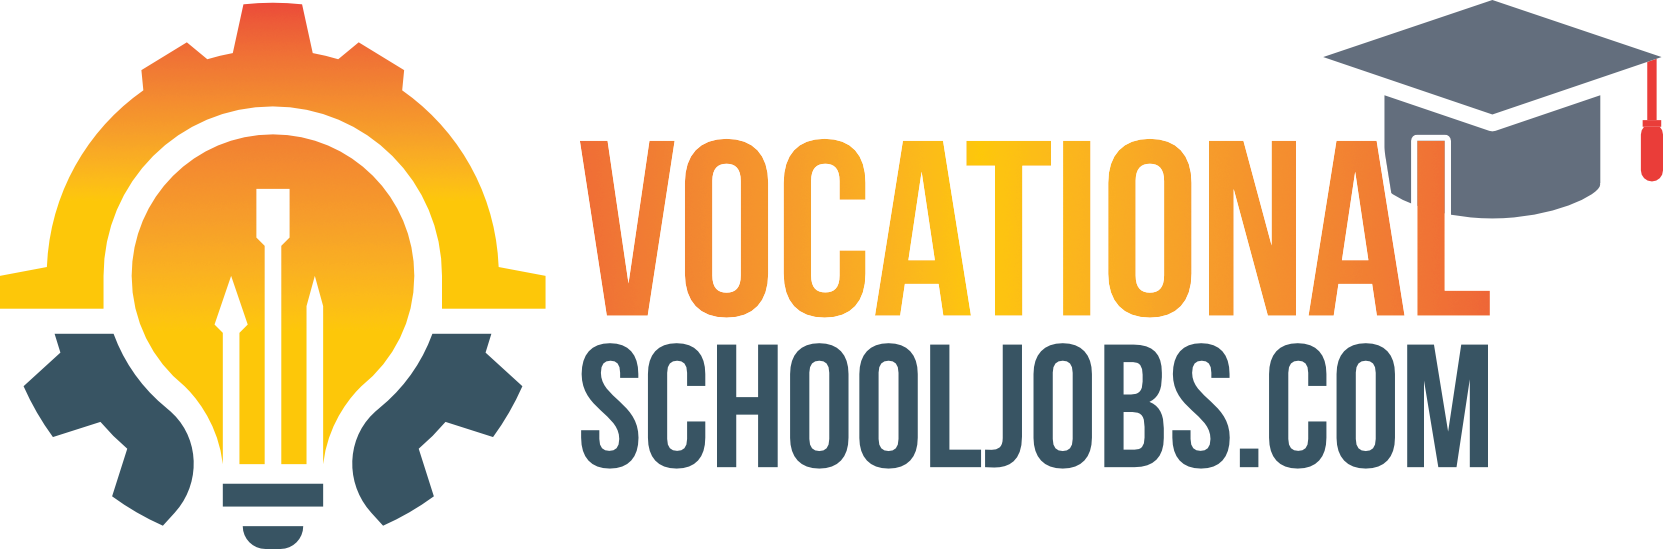 VocationalSchoolJobs.com